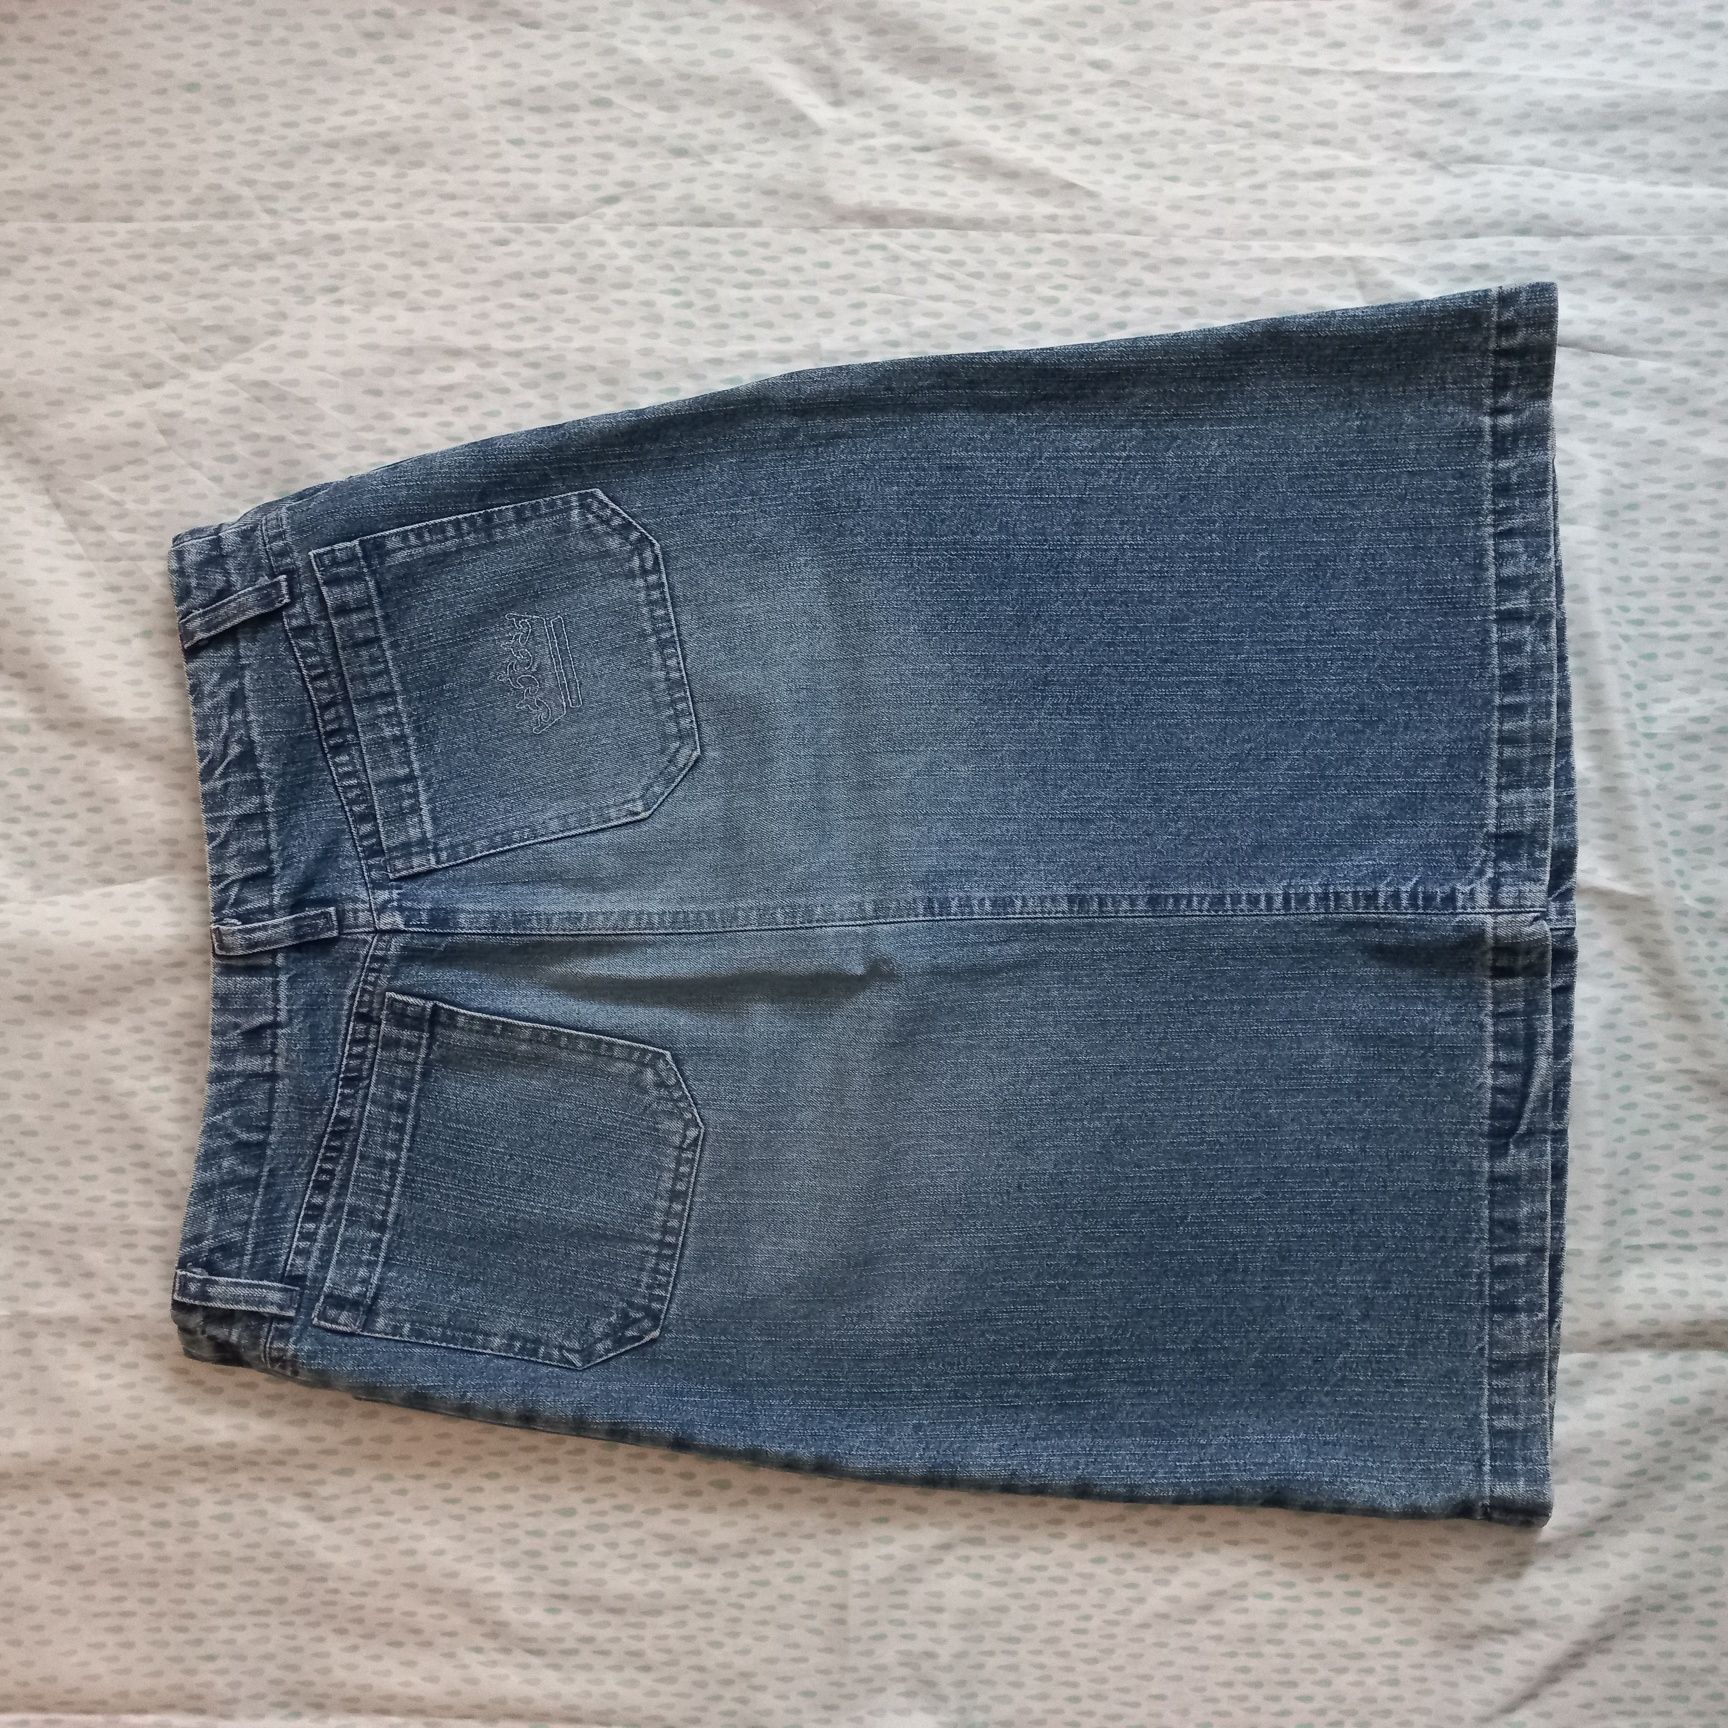 Spódnica jeansowa Henri Lloyd rozmiar 38